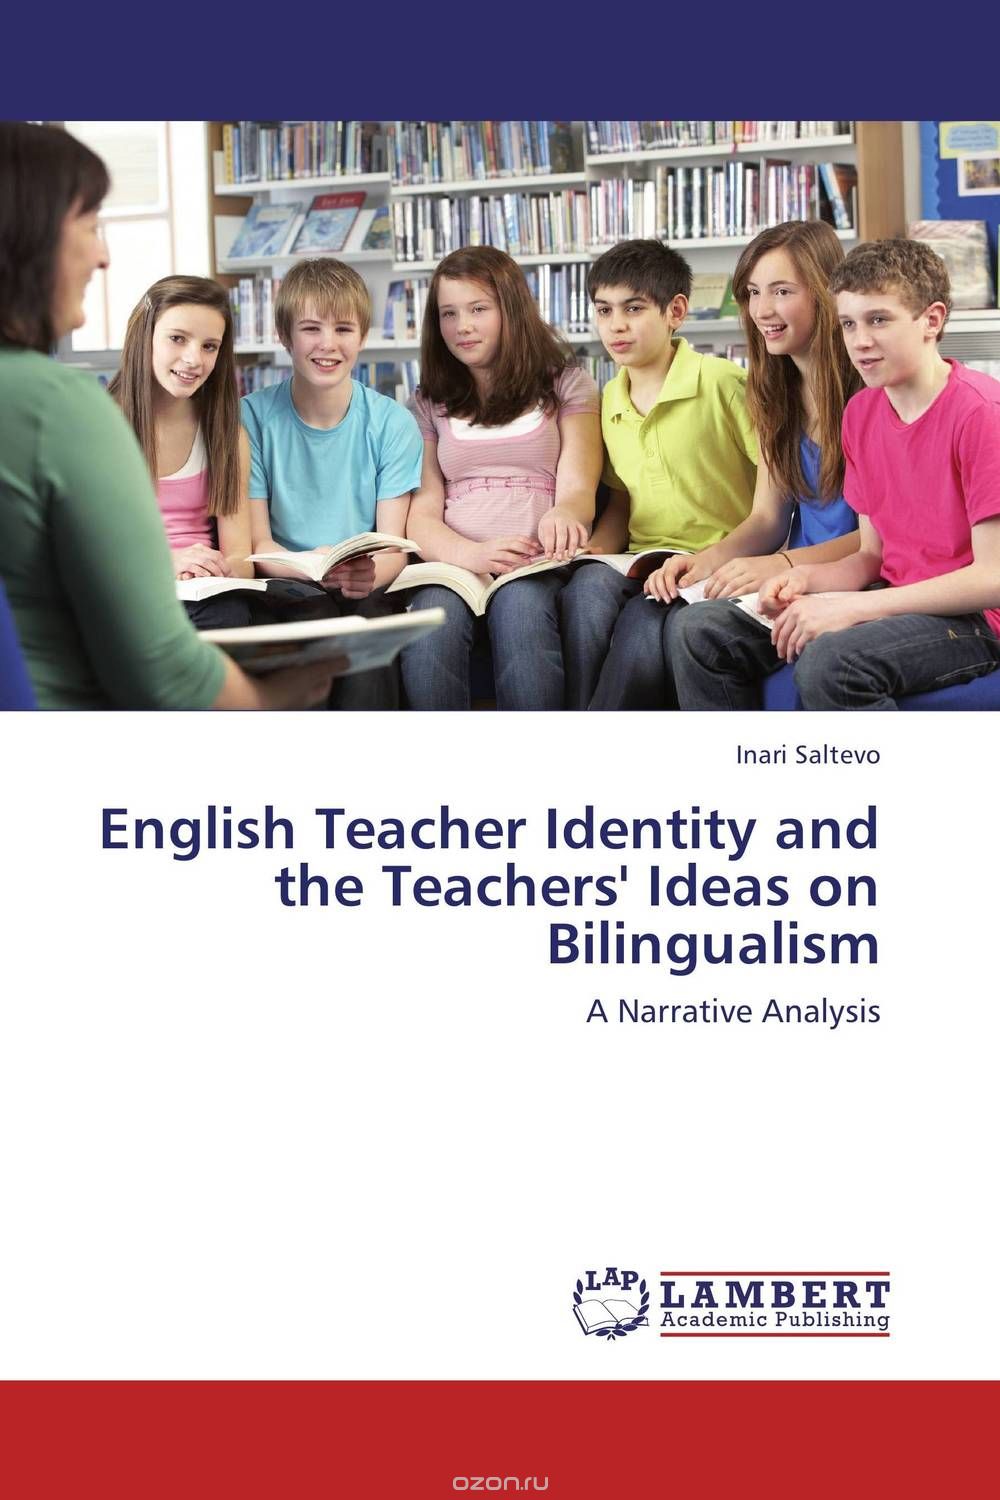 Скачать книгу "English Teacher Identity and the Teachers' Ideas on Bilingualism"